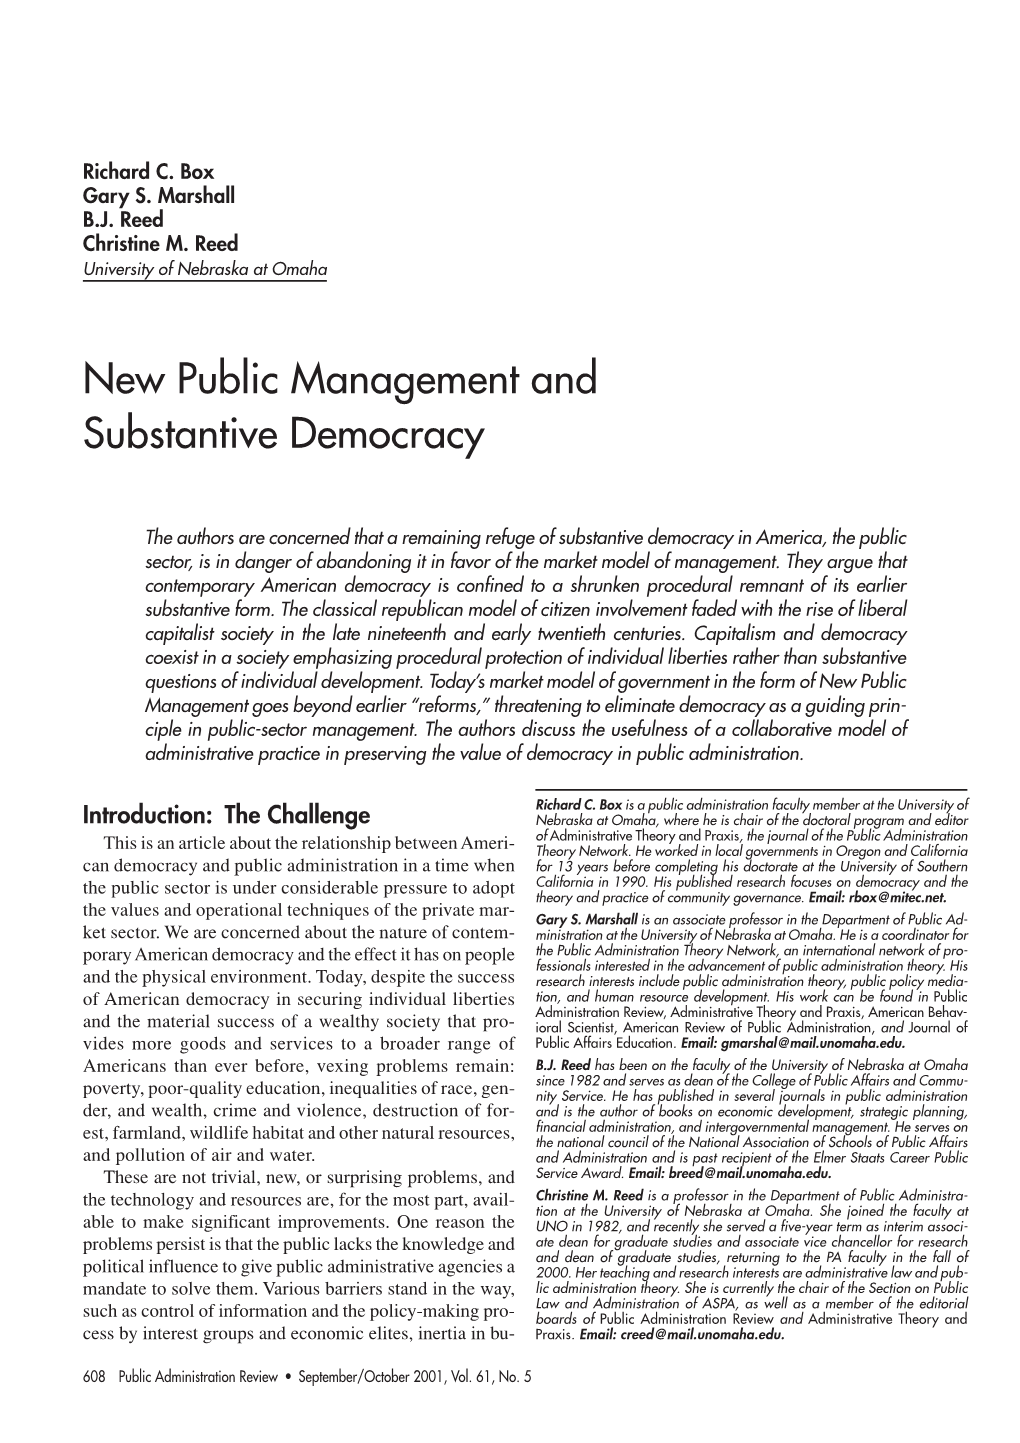 New Public Management and Substantive Democracy